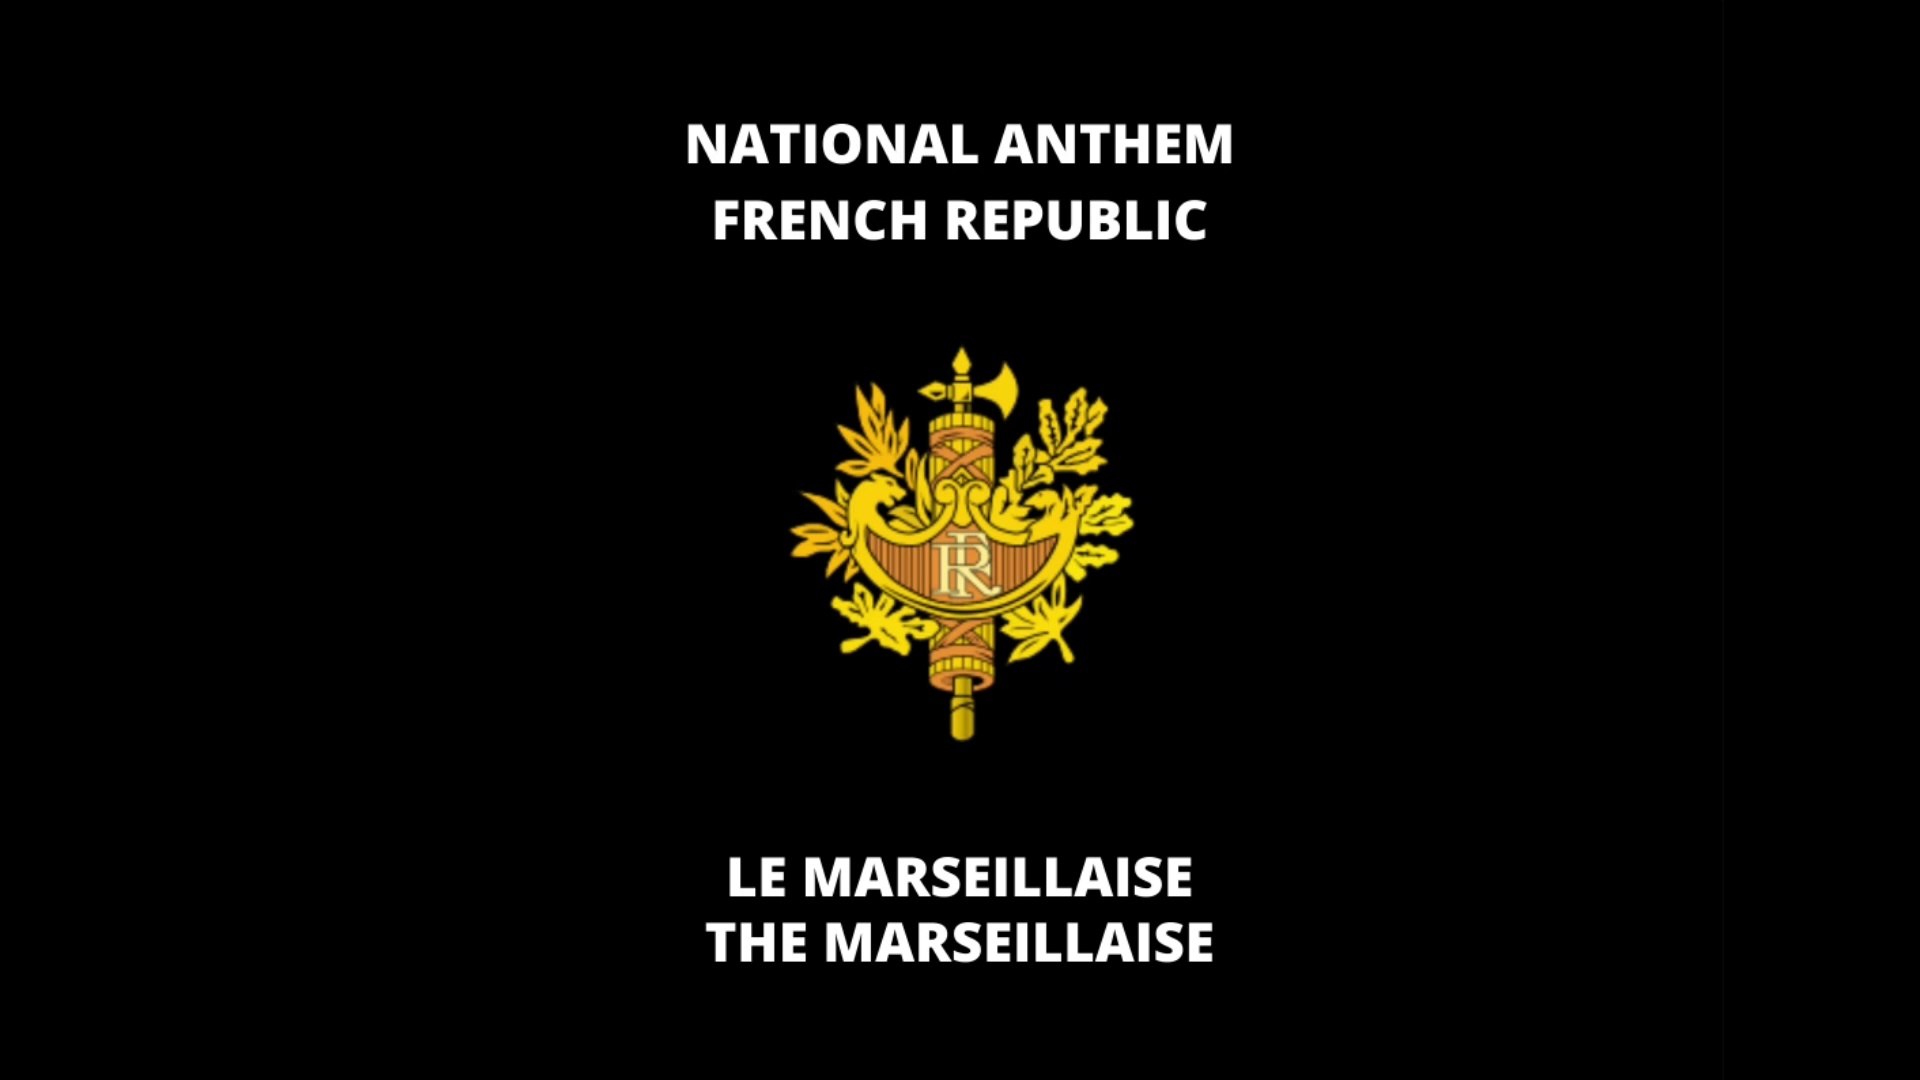 La Marseillaise' Lyrics in French and English